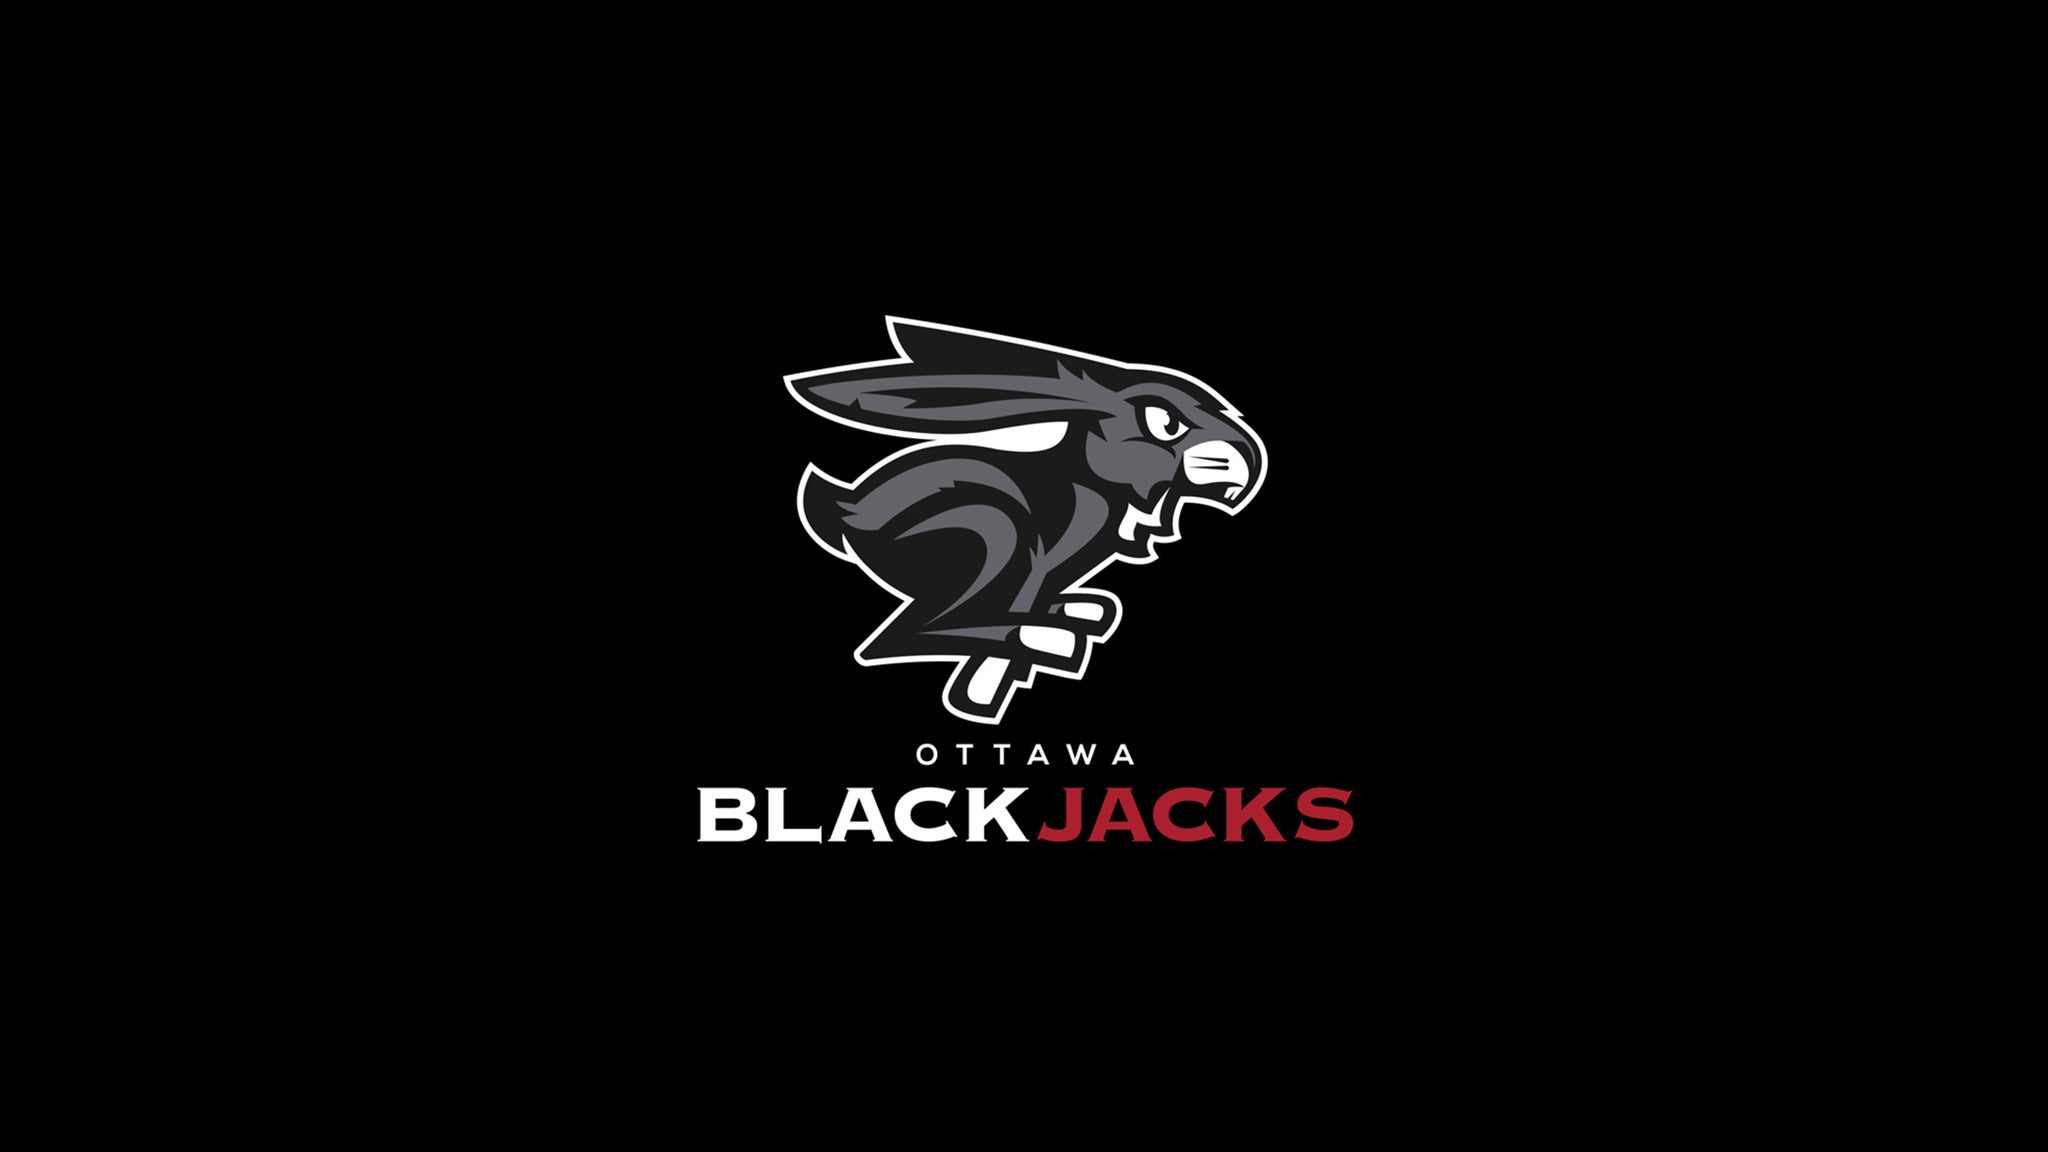 Ottawa BlackJacks vs. Niagara River Lions in Ottawa promo photo for Fan Zone  presale offer code